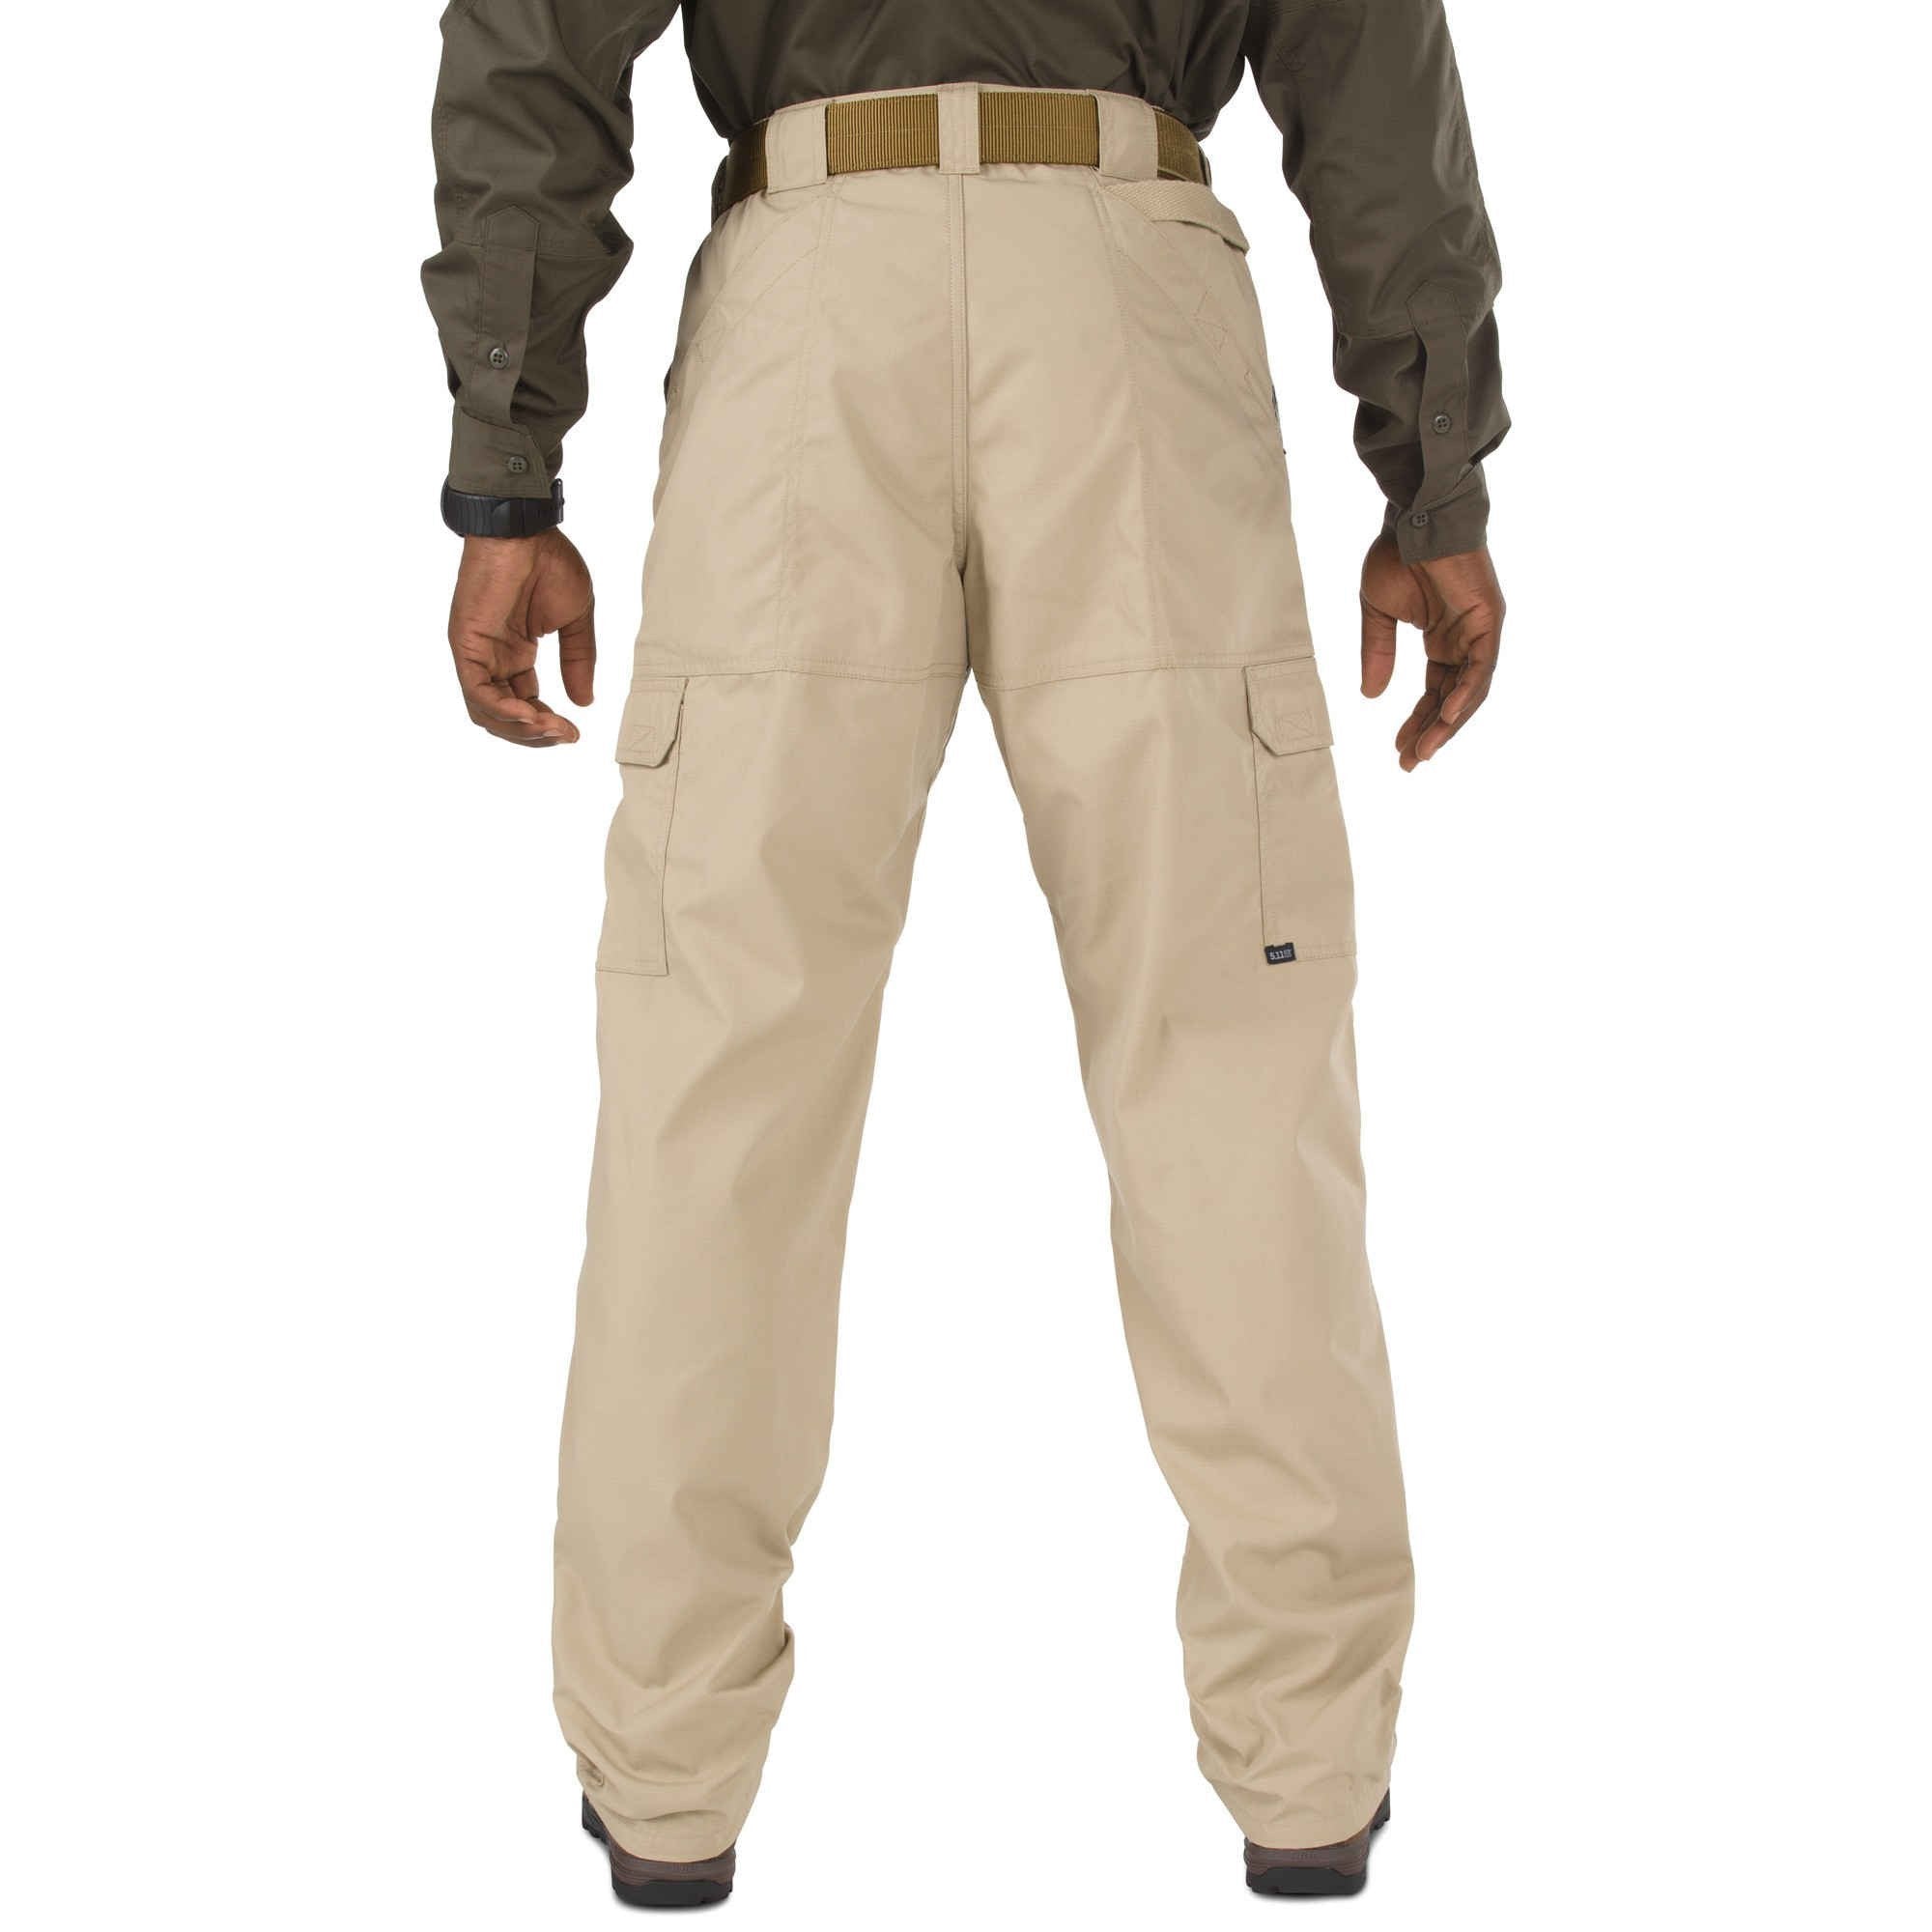 5.11 Tactical Taclite Pro Pants - TDU Khaki Pants 5.11 Tactical Tactical Gear Supplier Tactical Distributors Australia